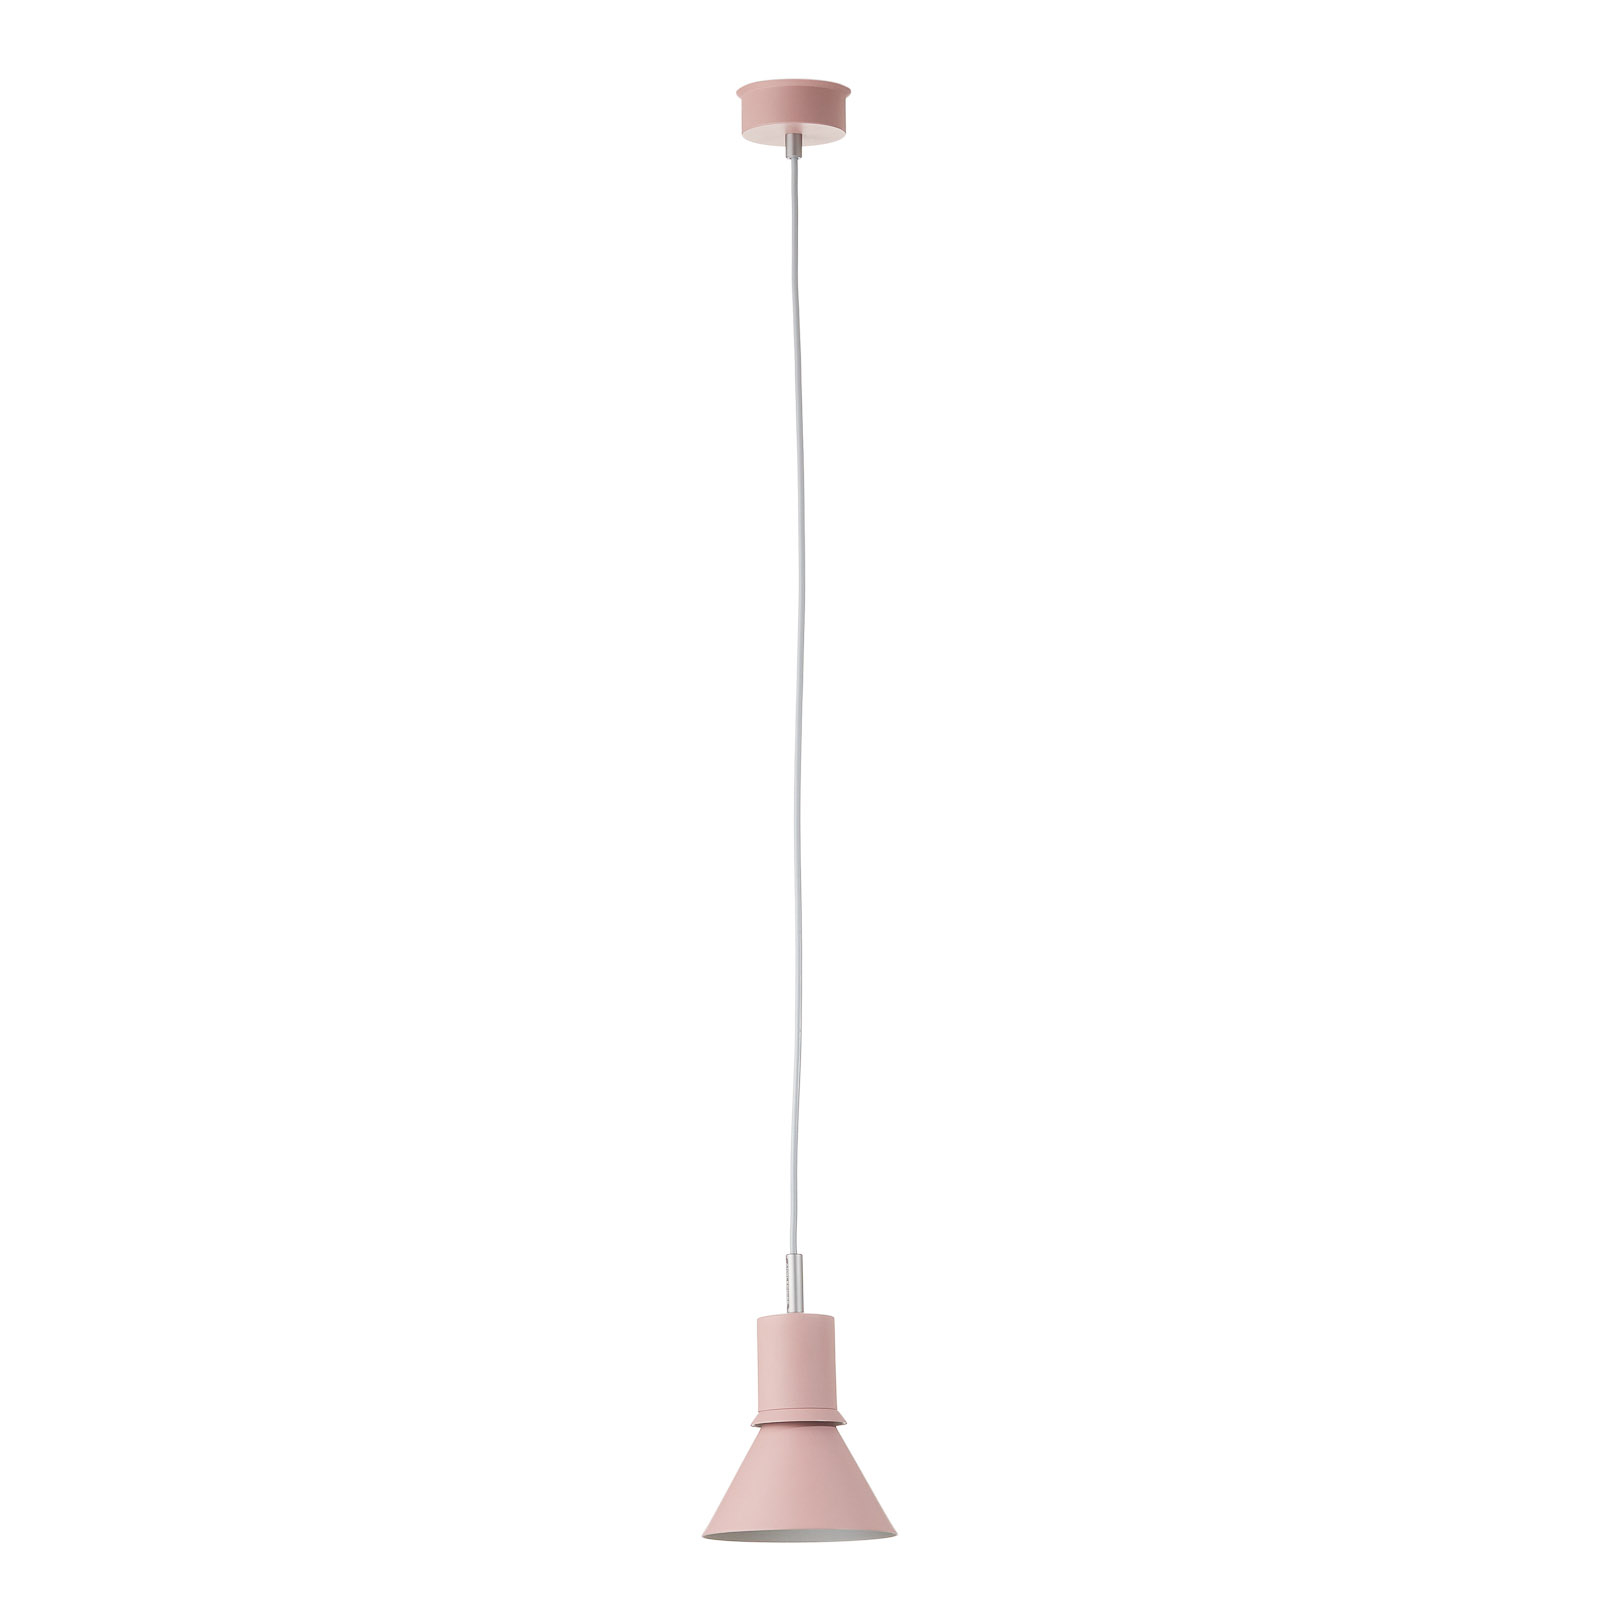 Anglepoise Type 80 hanglamp, rosé